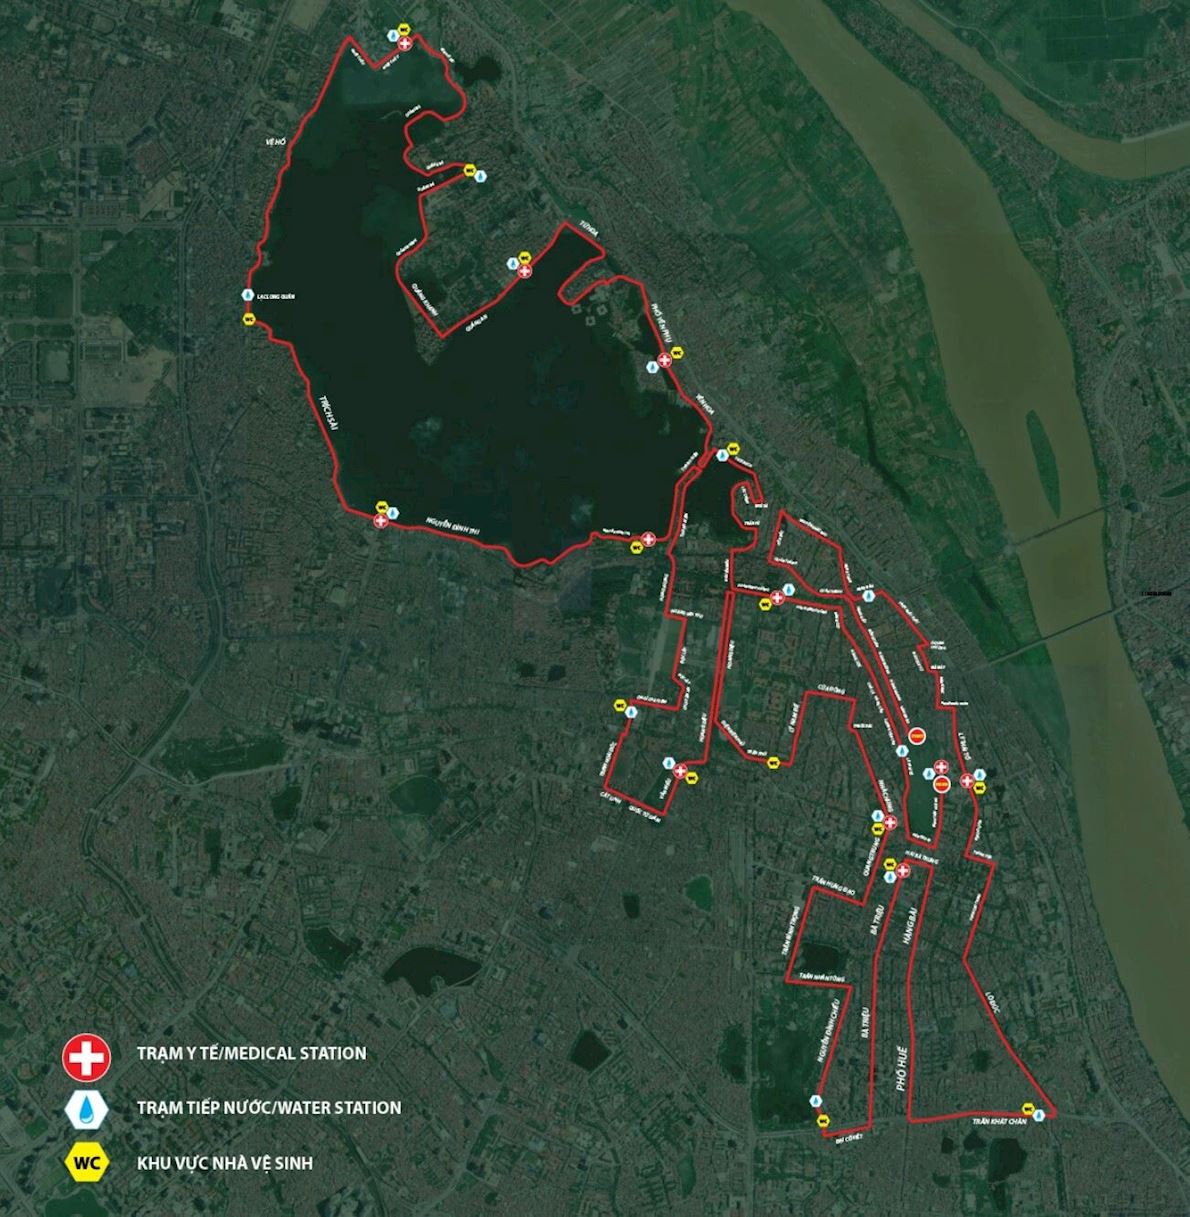 Standard Chartered Hanoi Marathon - Heritage Race Route Map